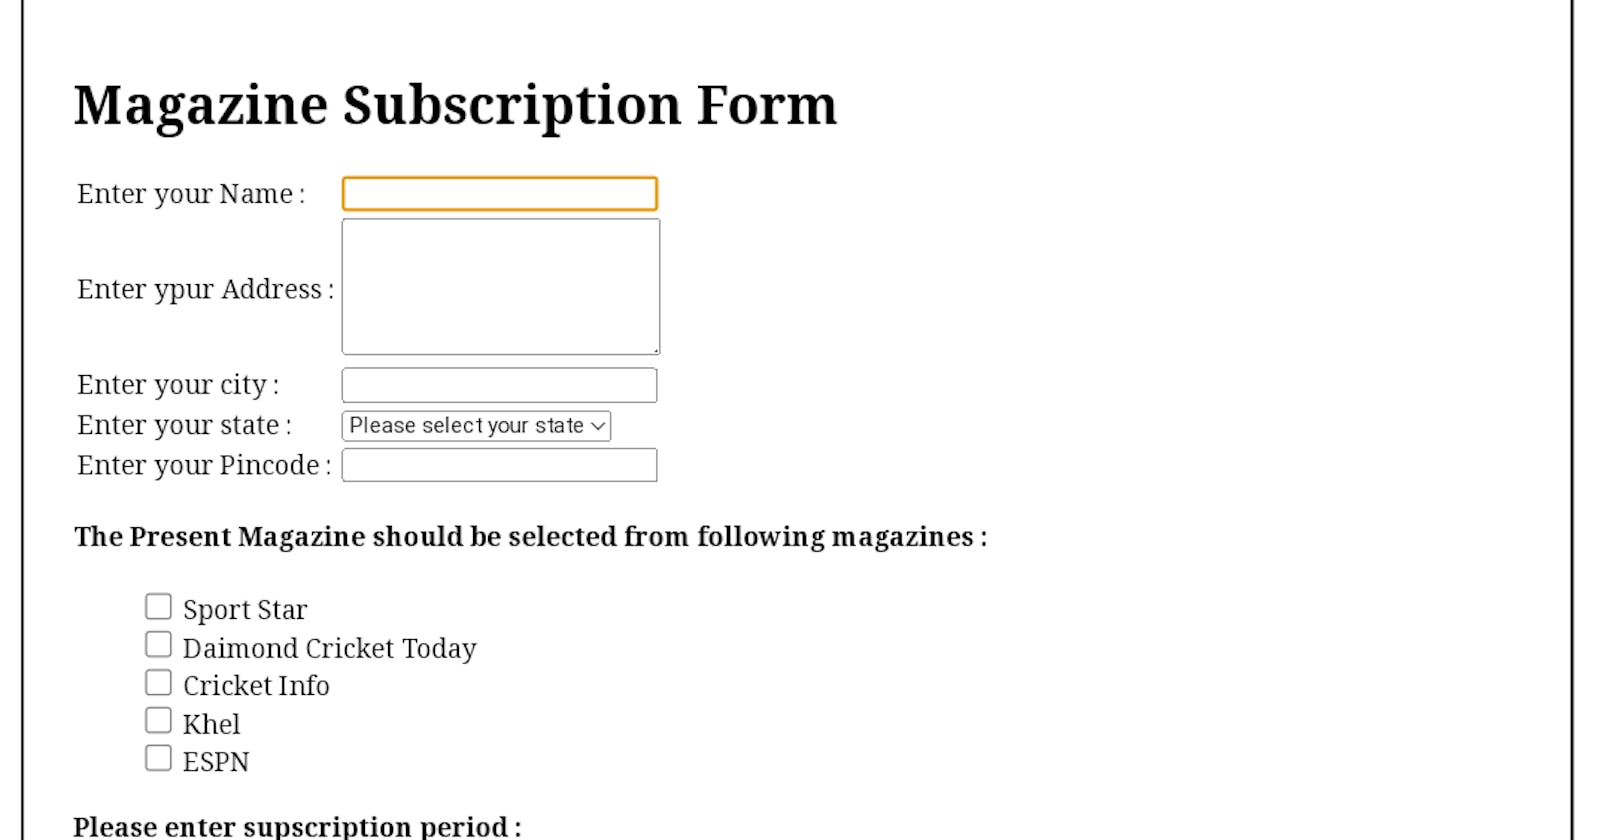 Magazine Subscription Form.